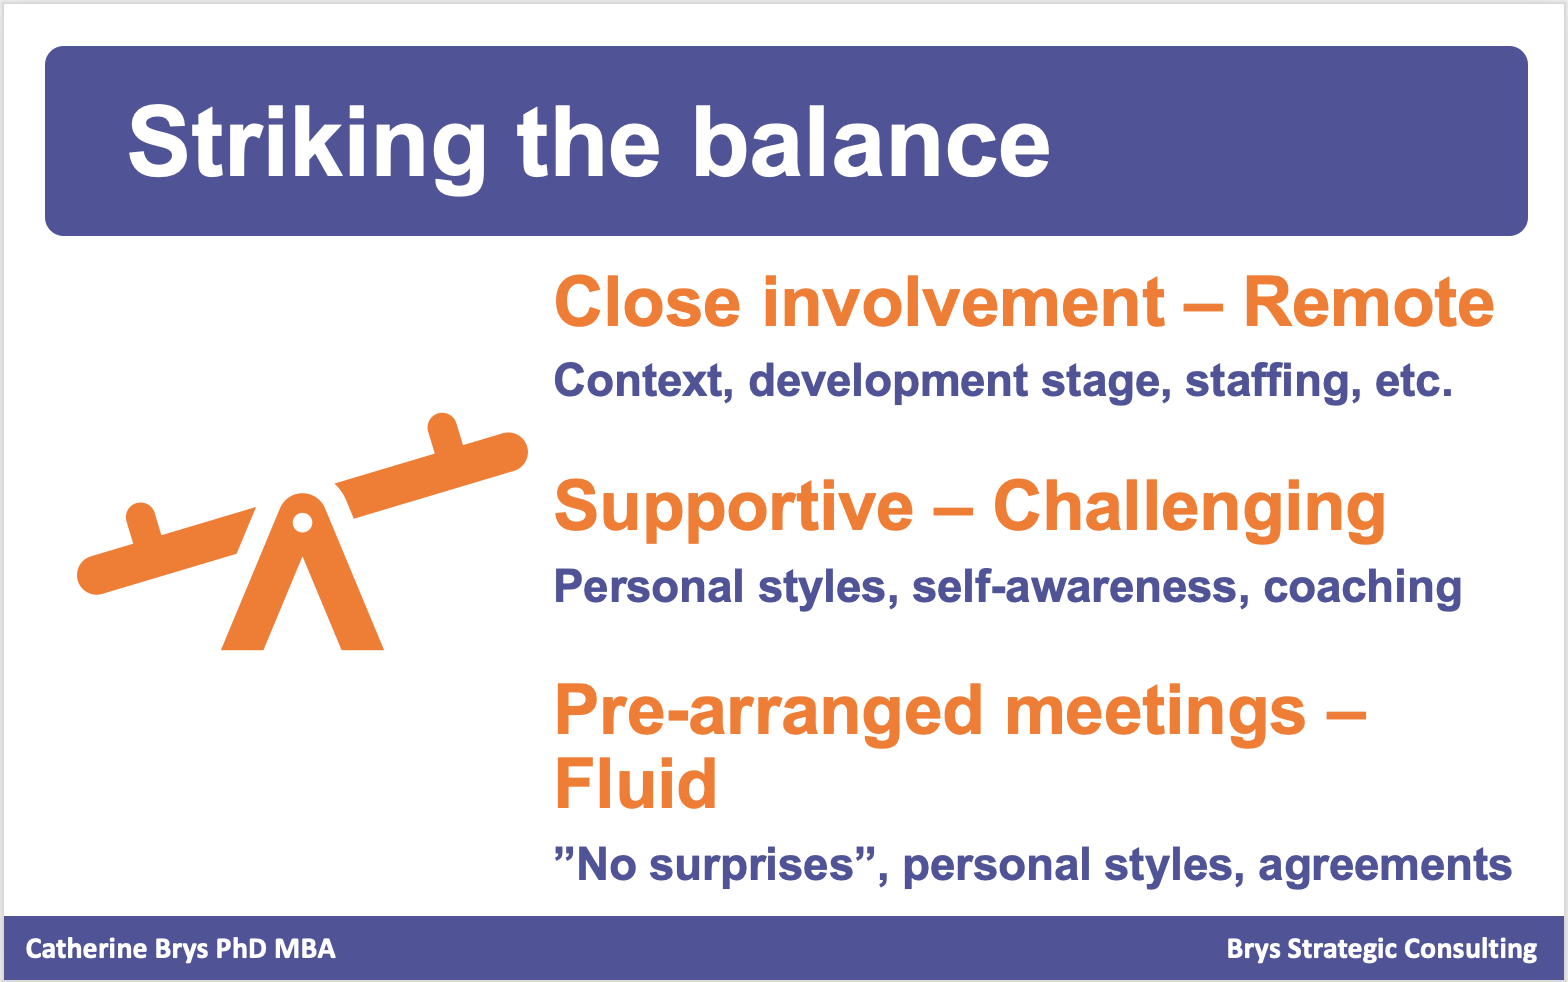 Sample slide: Striking the balance